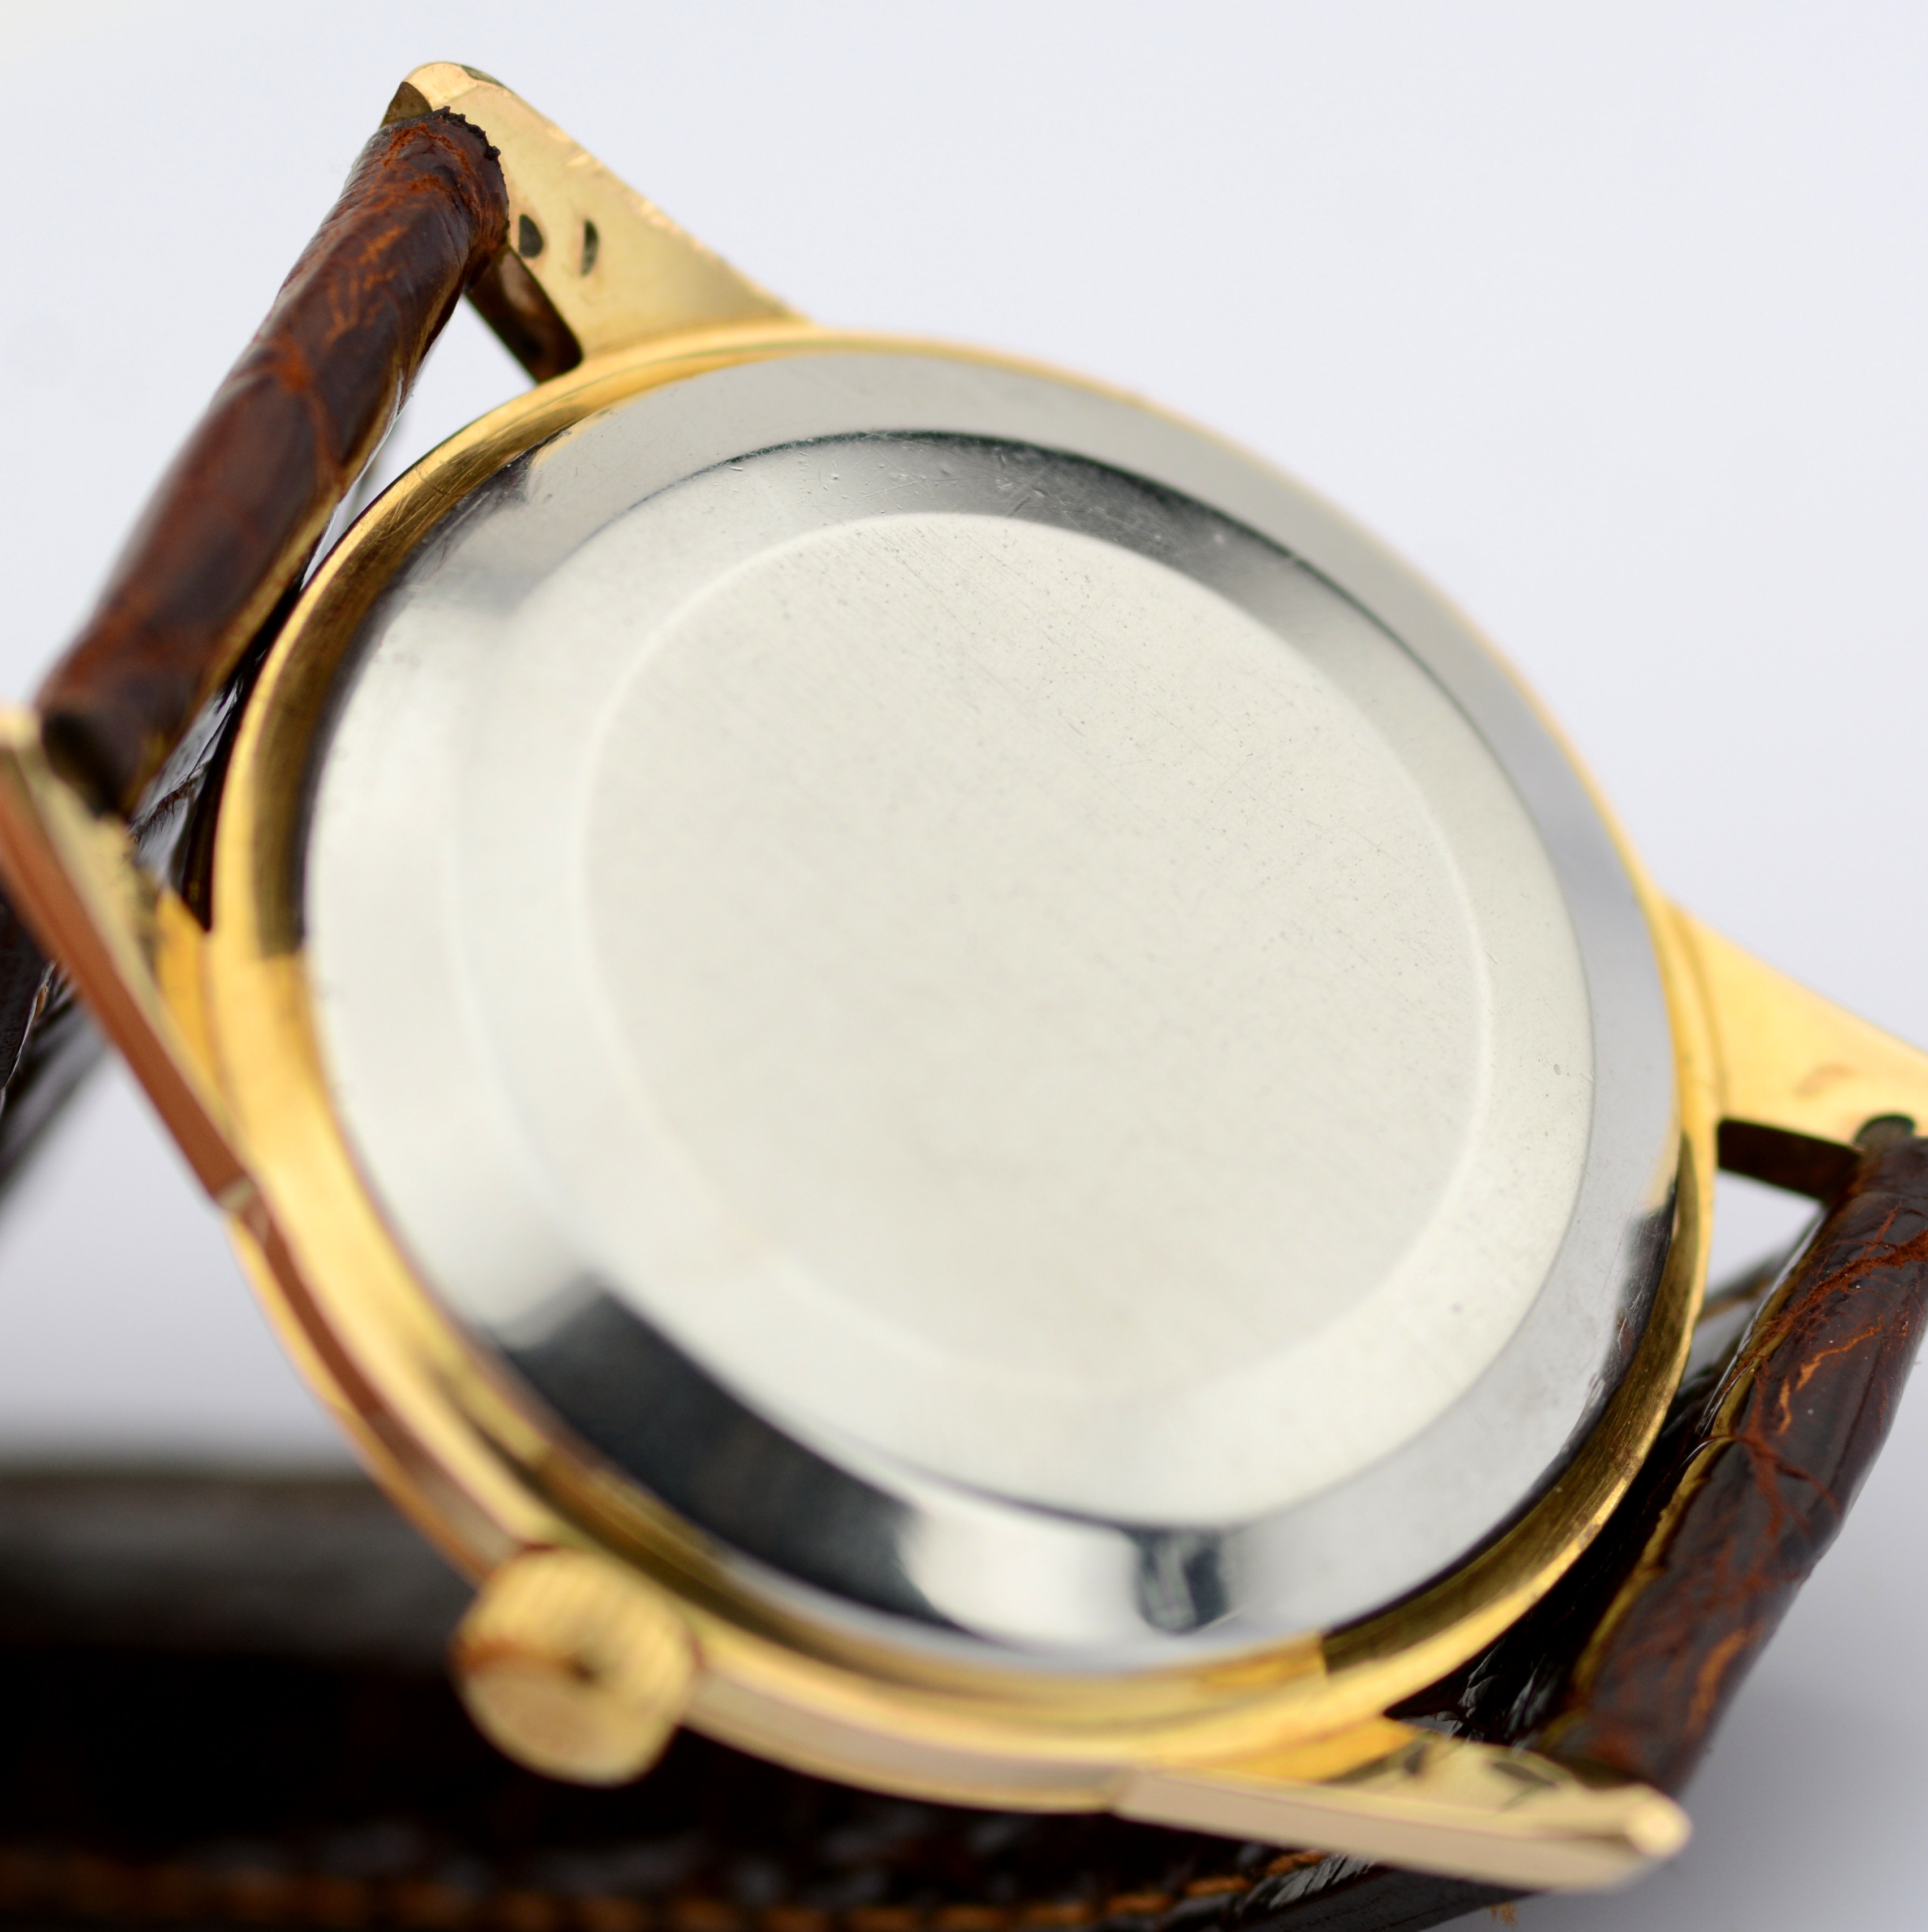 Omega / Vintage Automatic - Gentlmen's Gold/Steel Wrist Watch - Image 7 of 8